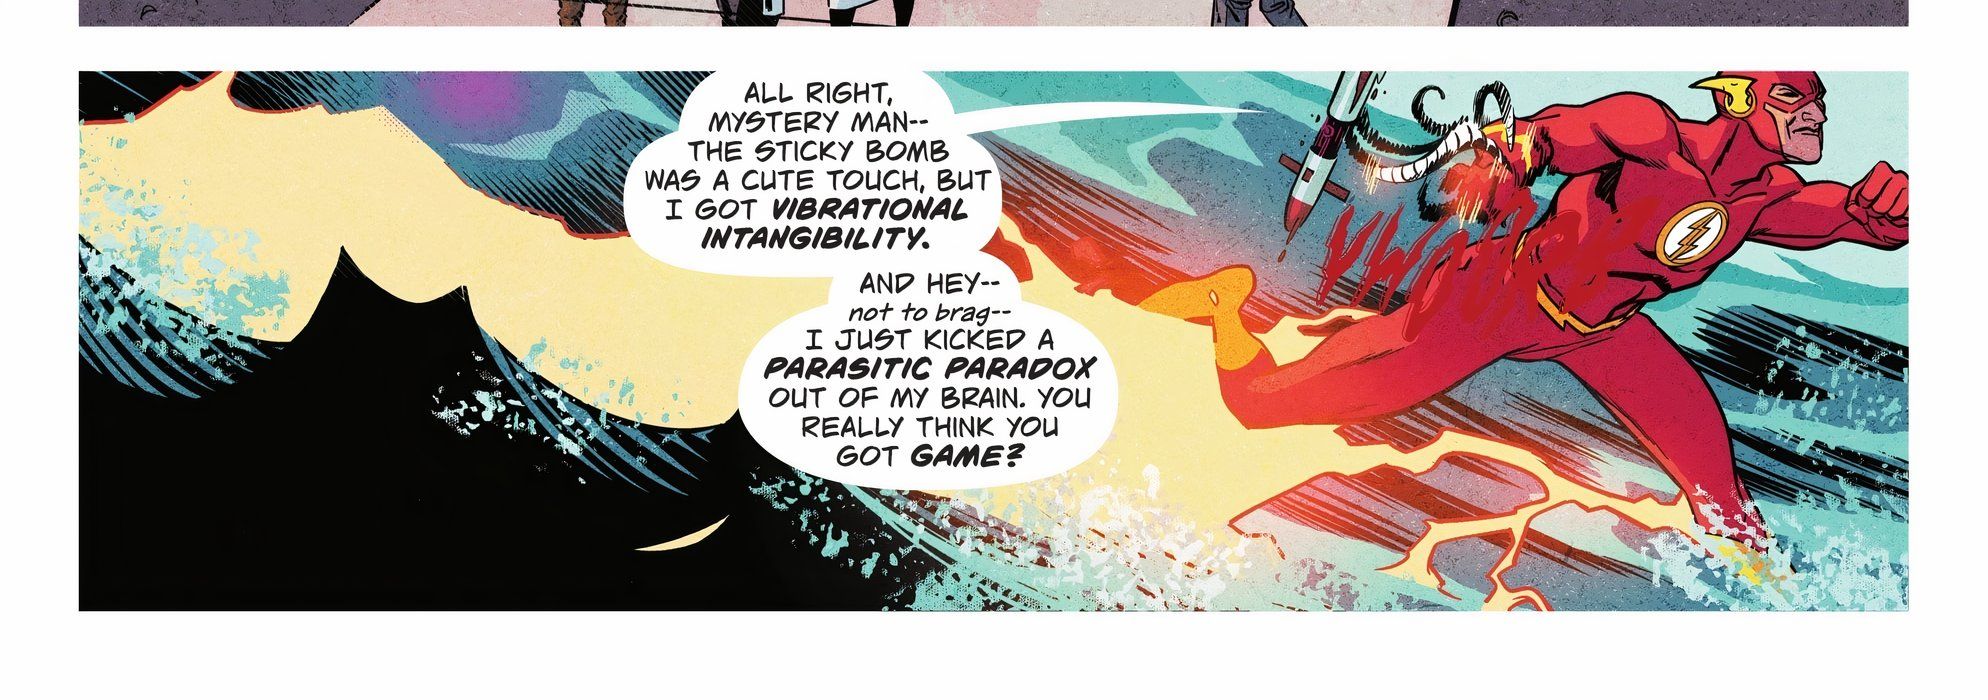 The Flash #9 featuring Barry Allen bragging